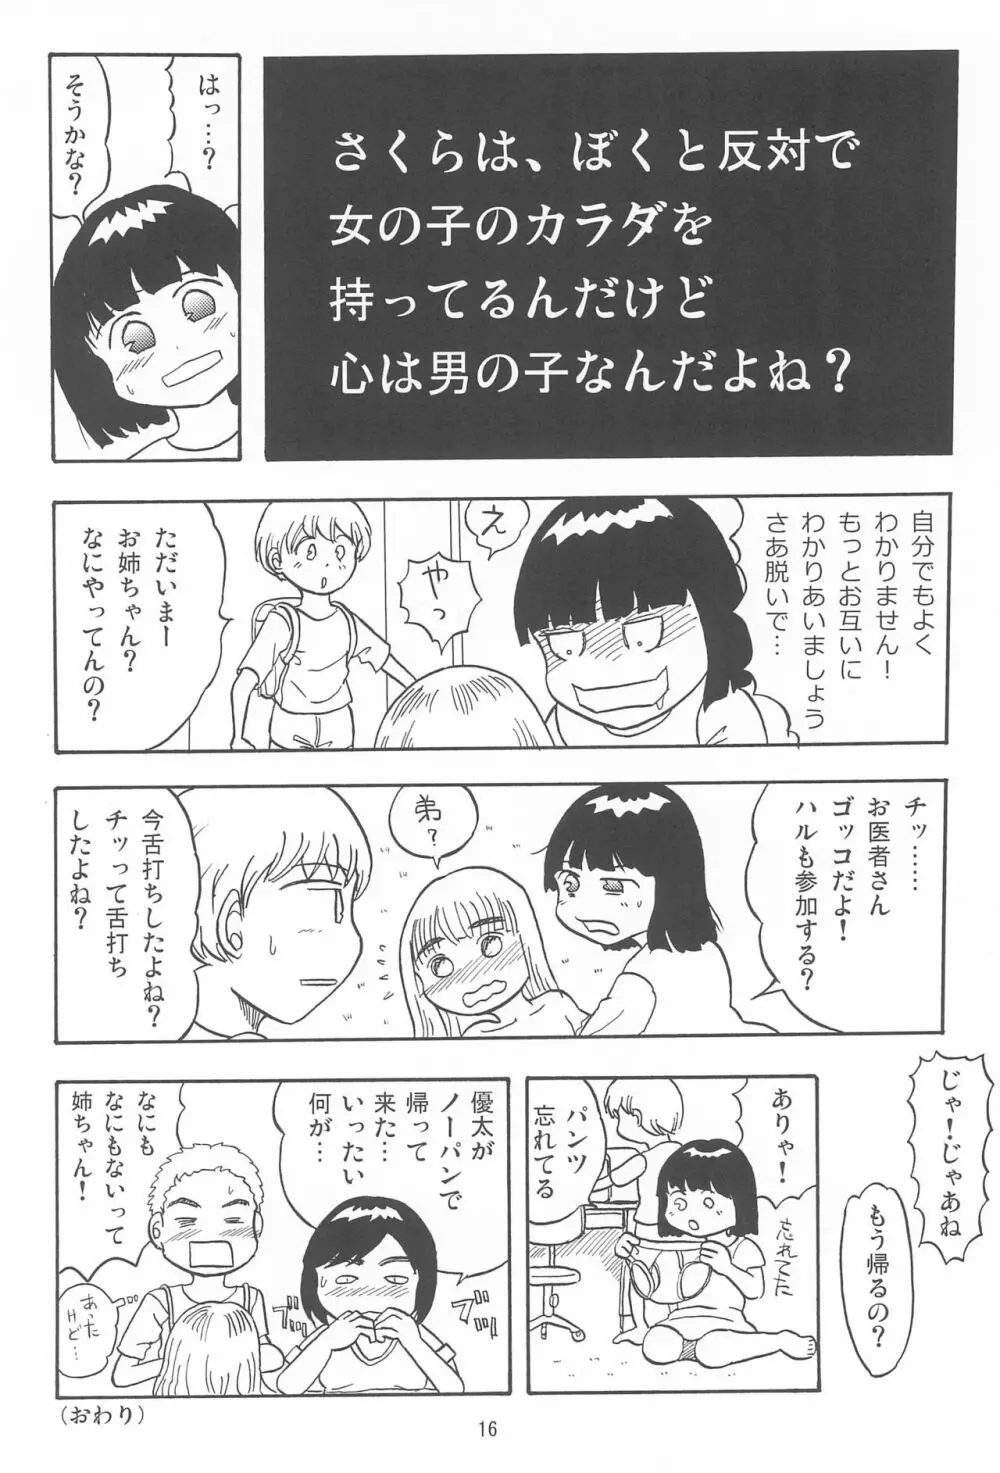 女子小学生日記10 - page16